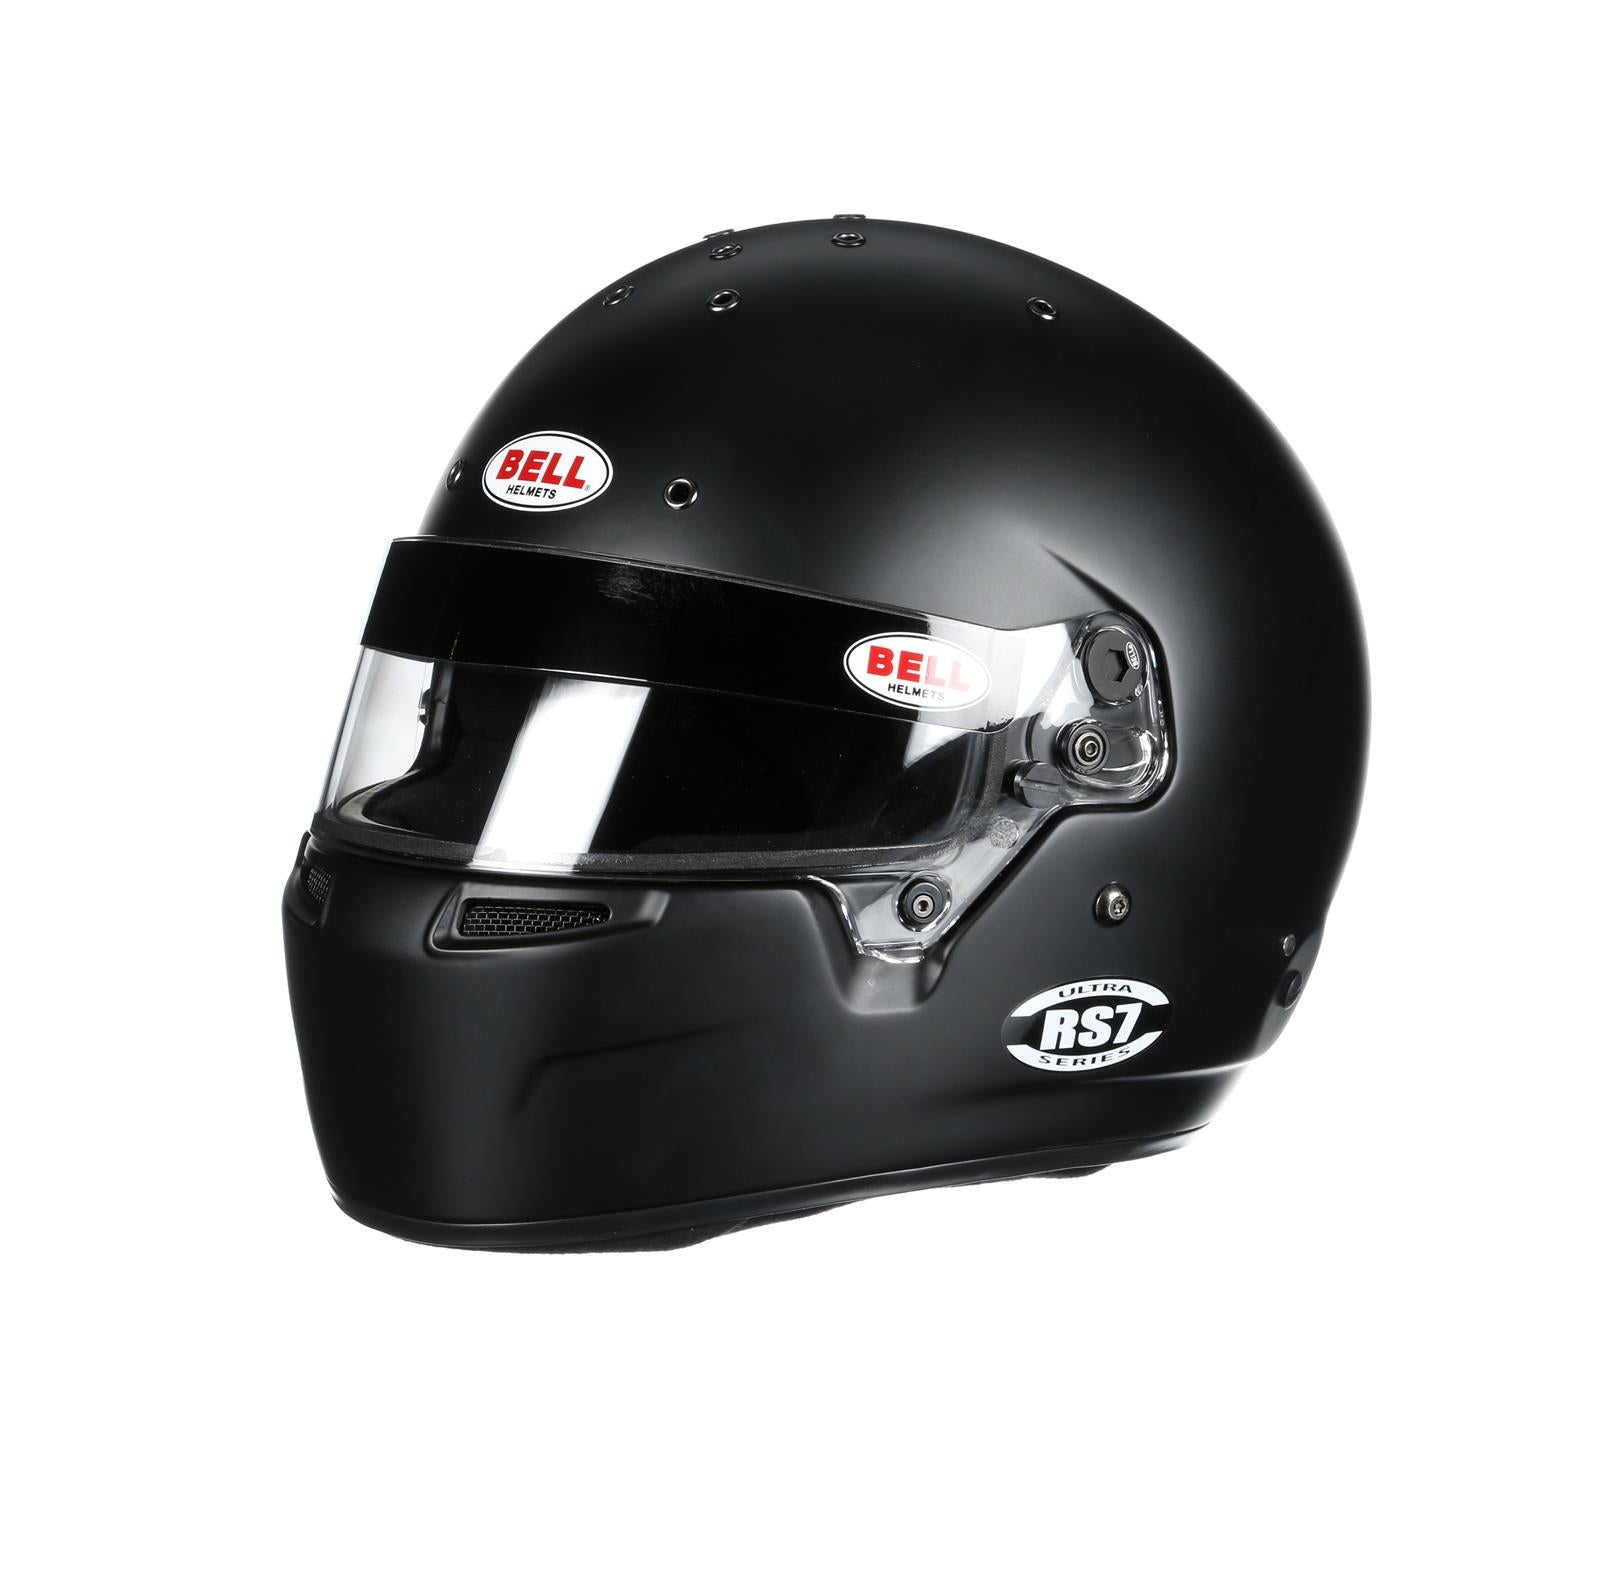 BELL 1310019 Racing helmet RS7 MATTE BLACK, SA2015/FIA8859, HANS, size 61+ (7 5/8+) Photo-1 